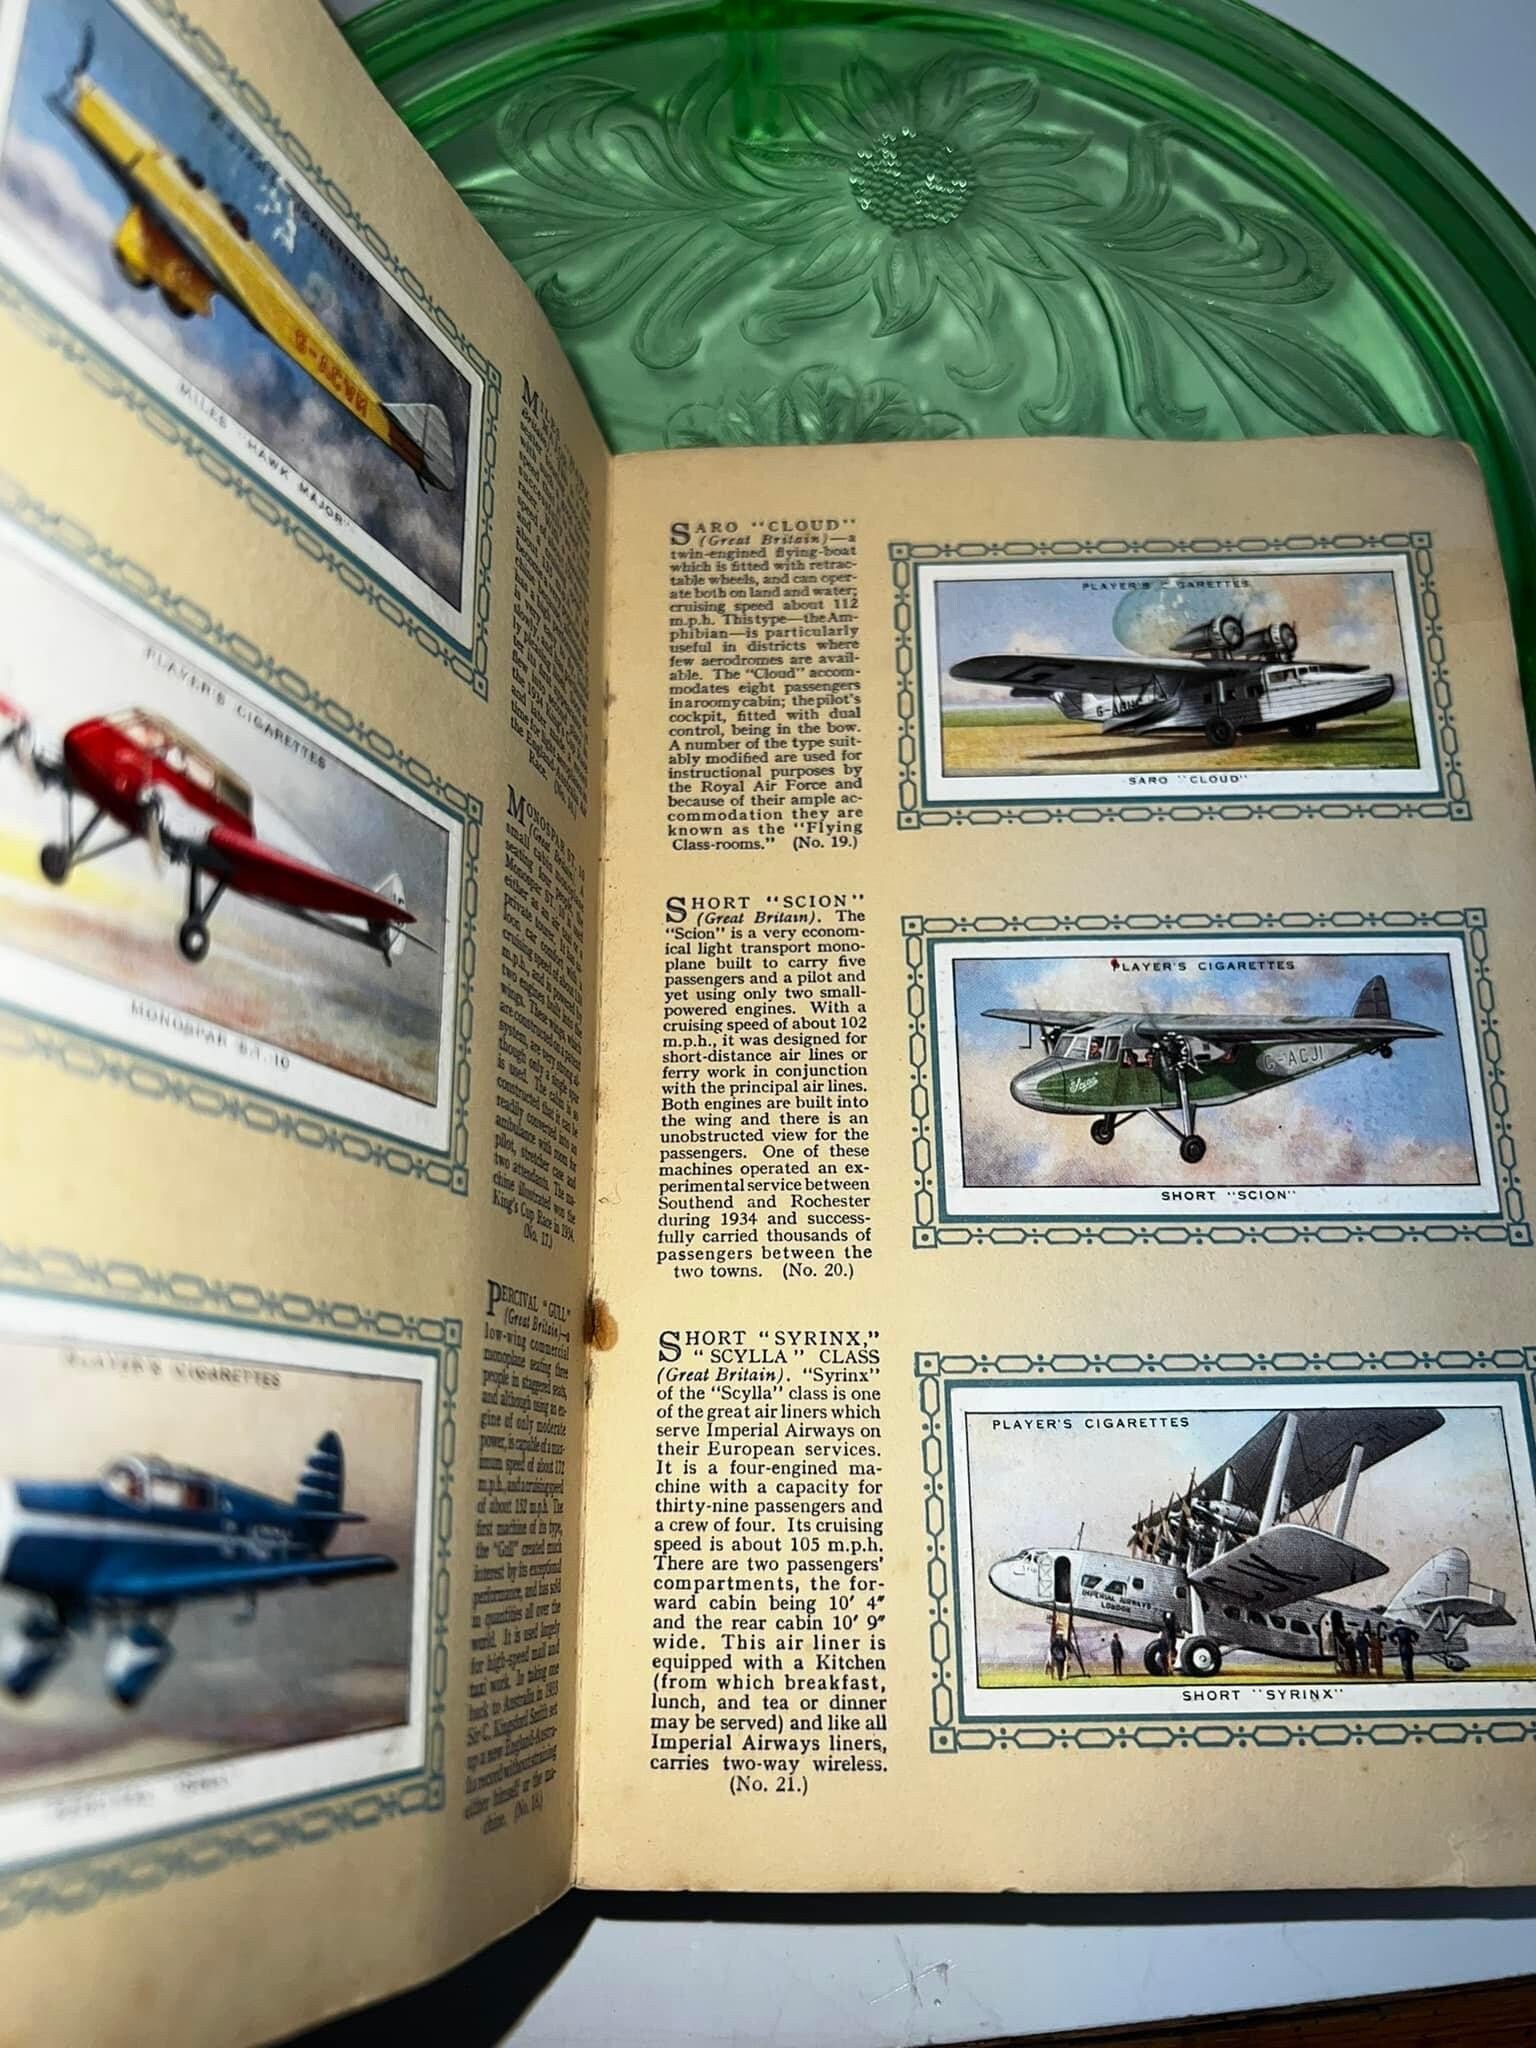 Antique Players navy cut tobacco cards album An album of aero planes (civil ) Filled